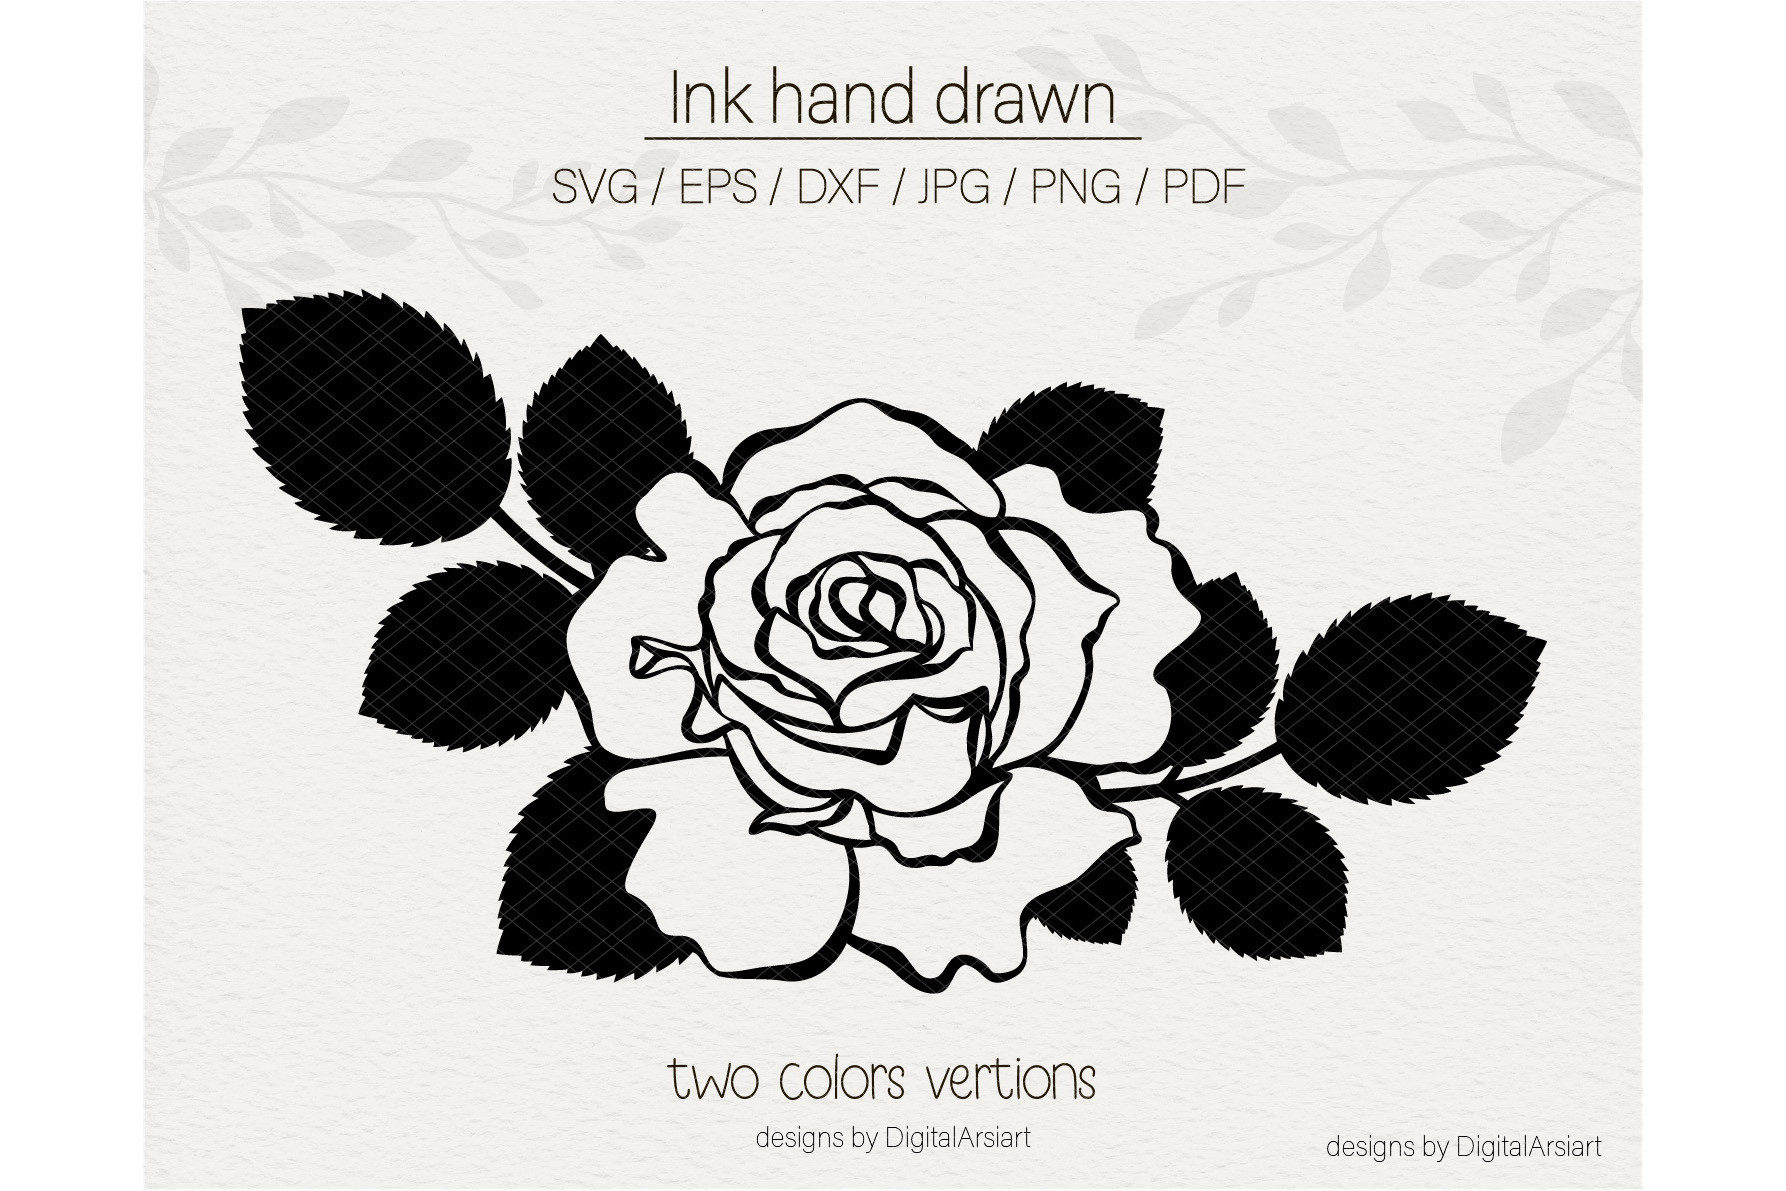 Rose SVG Flower Svg Vector Cut File for Silhouette Cricut Pdf Eps